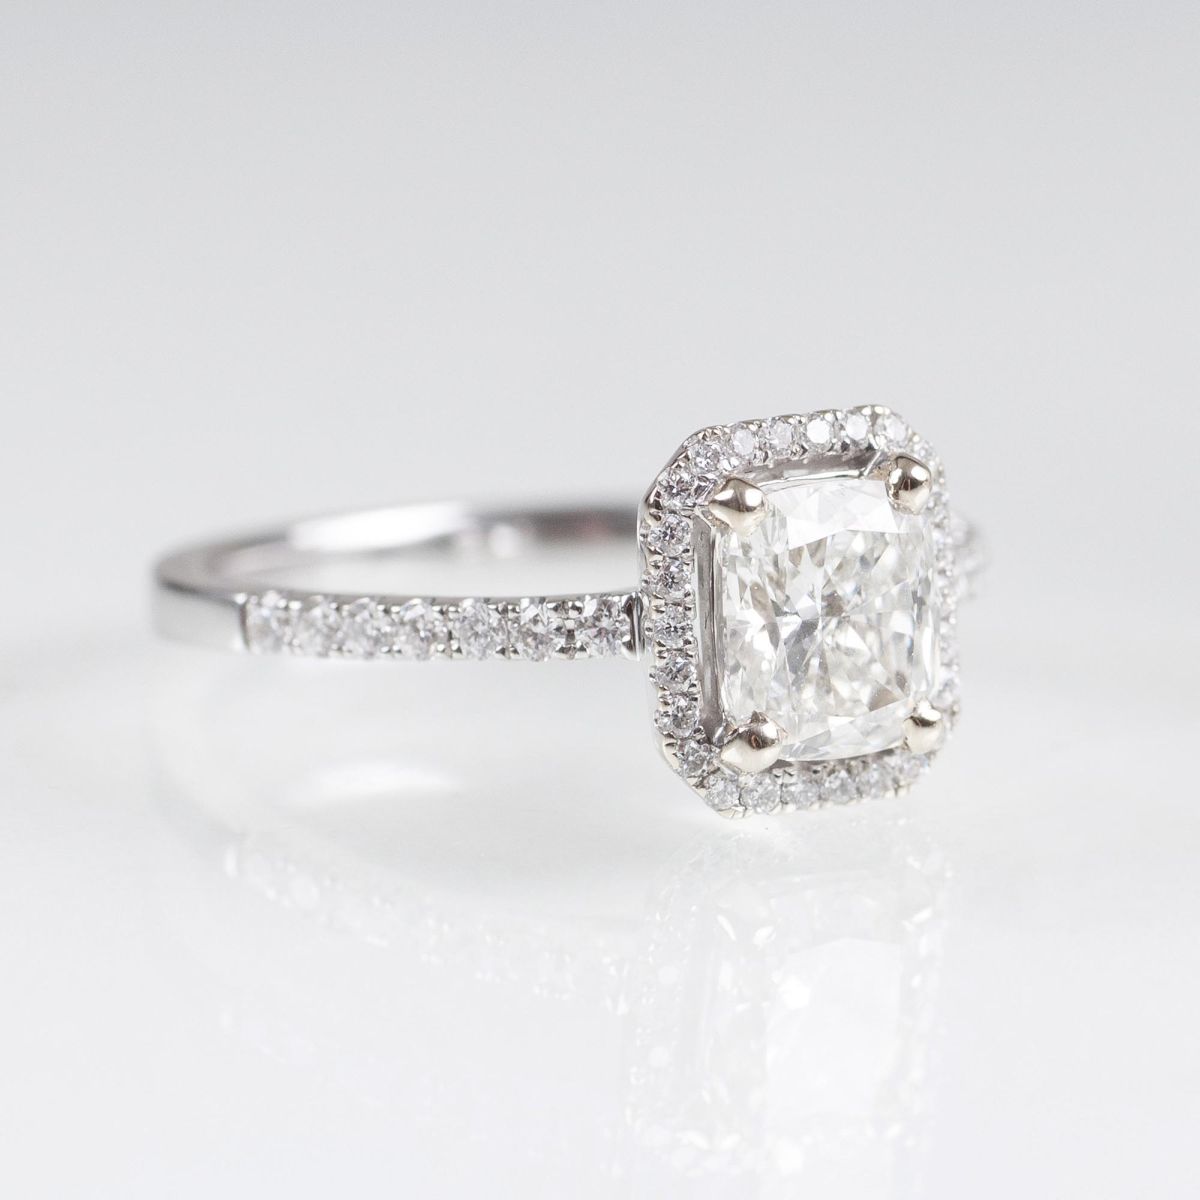 A fine Solitaire Diamond Ring - image 2